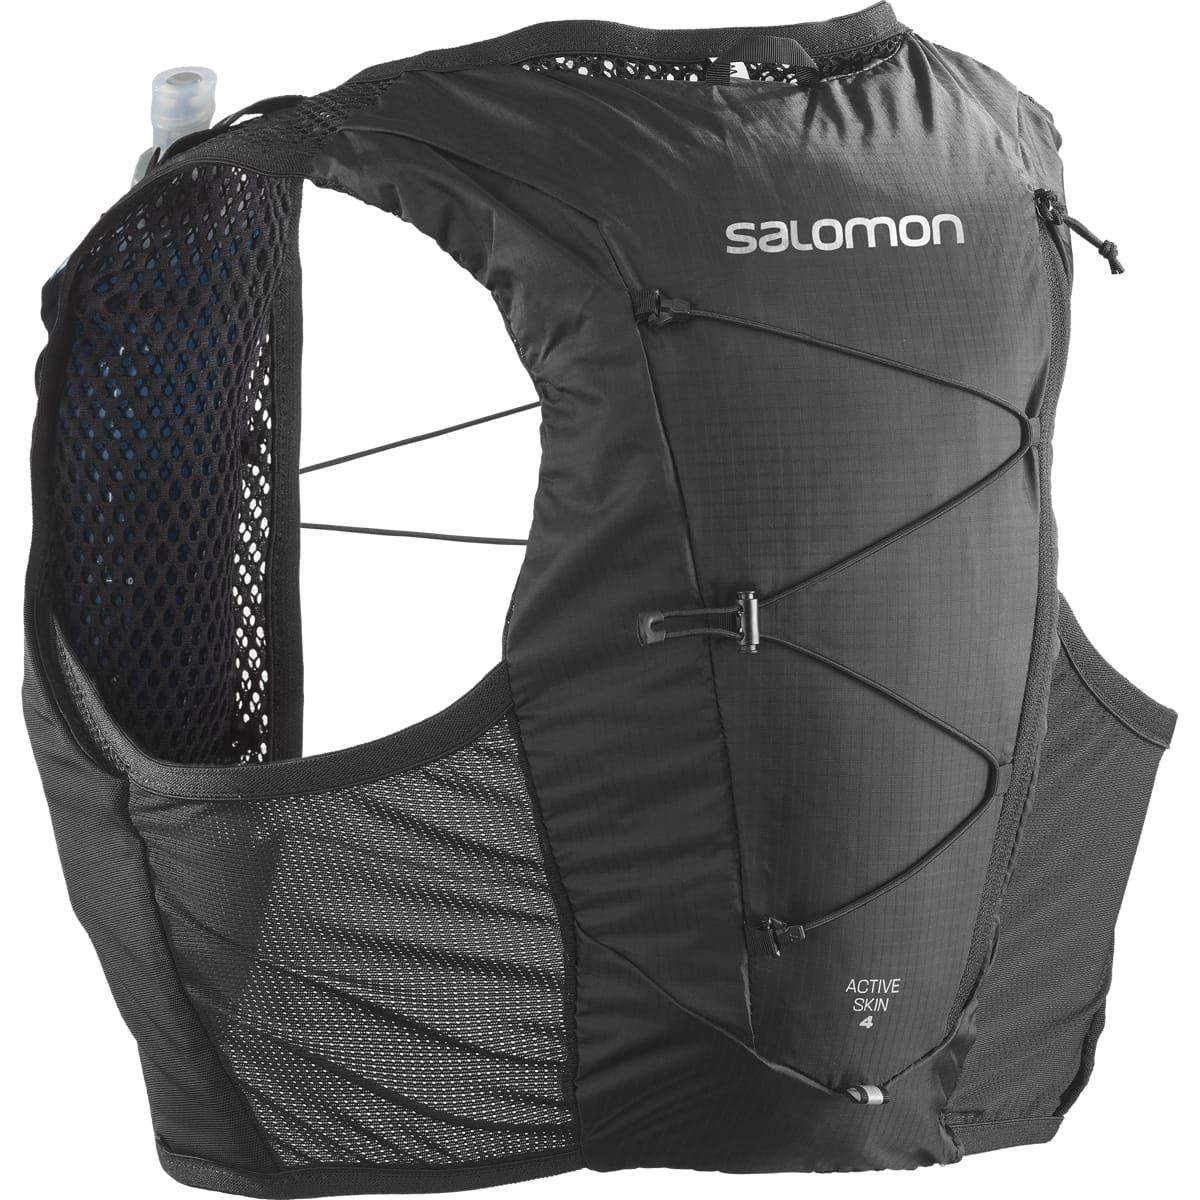 Salomon Active Skin 4 Set Black